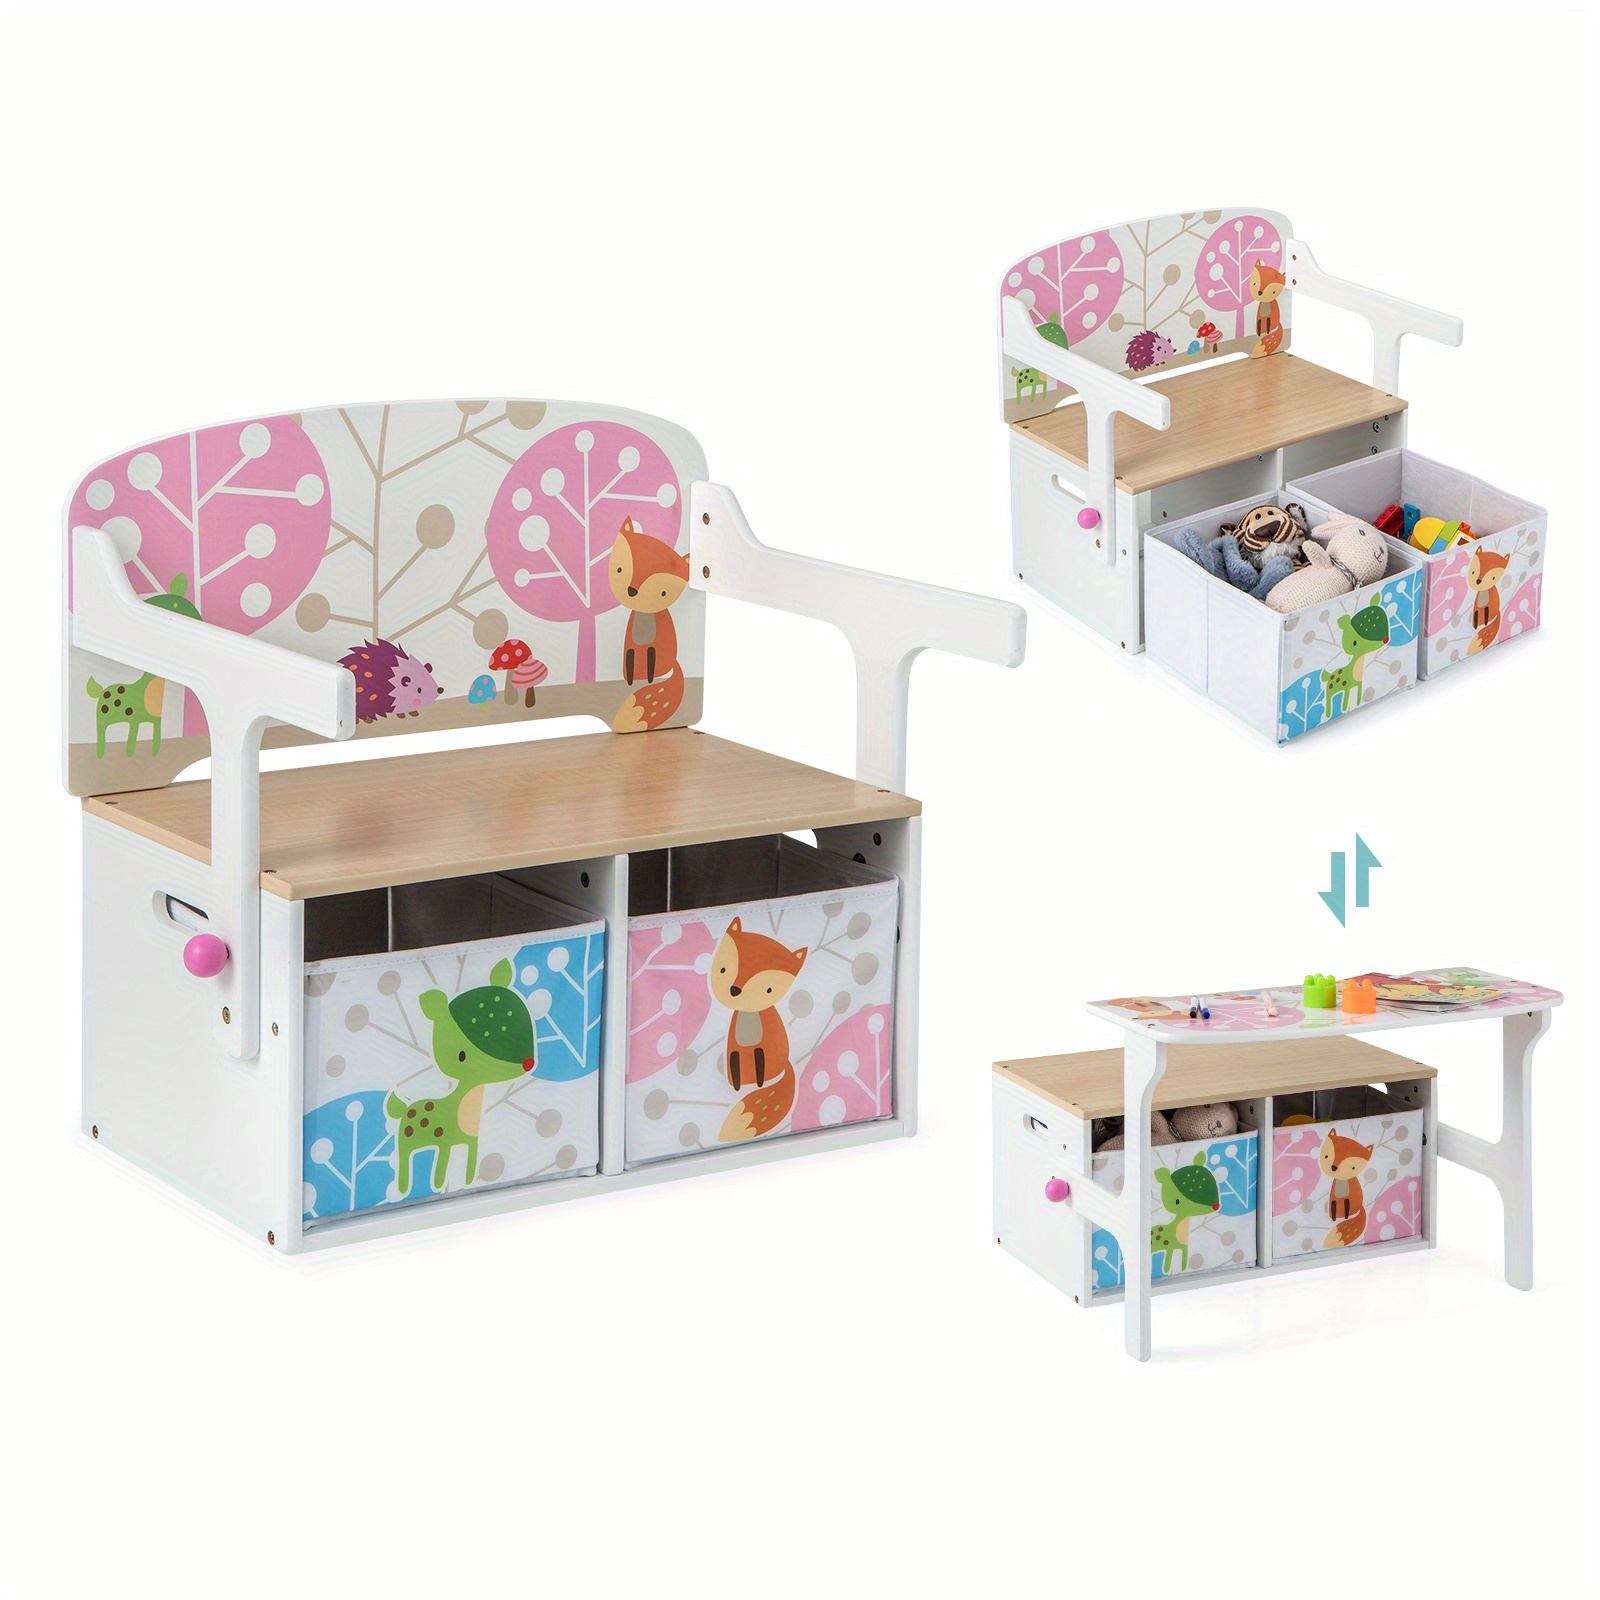 

Lifezeal 3 In 1 Kids Convertible Activity Bench Children Table & Chair Set W/ 2 Bins